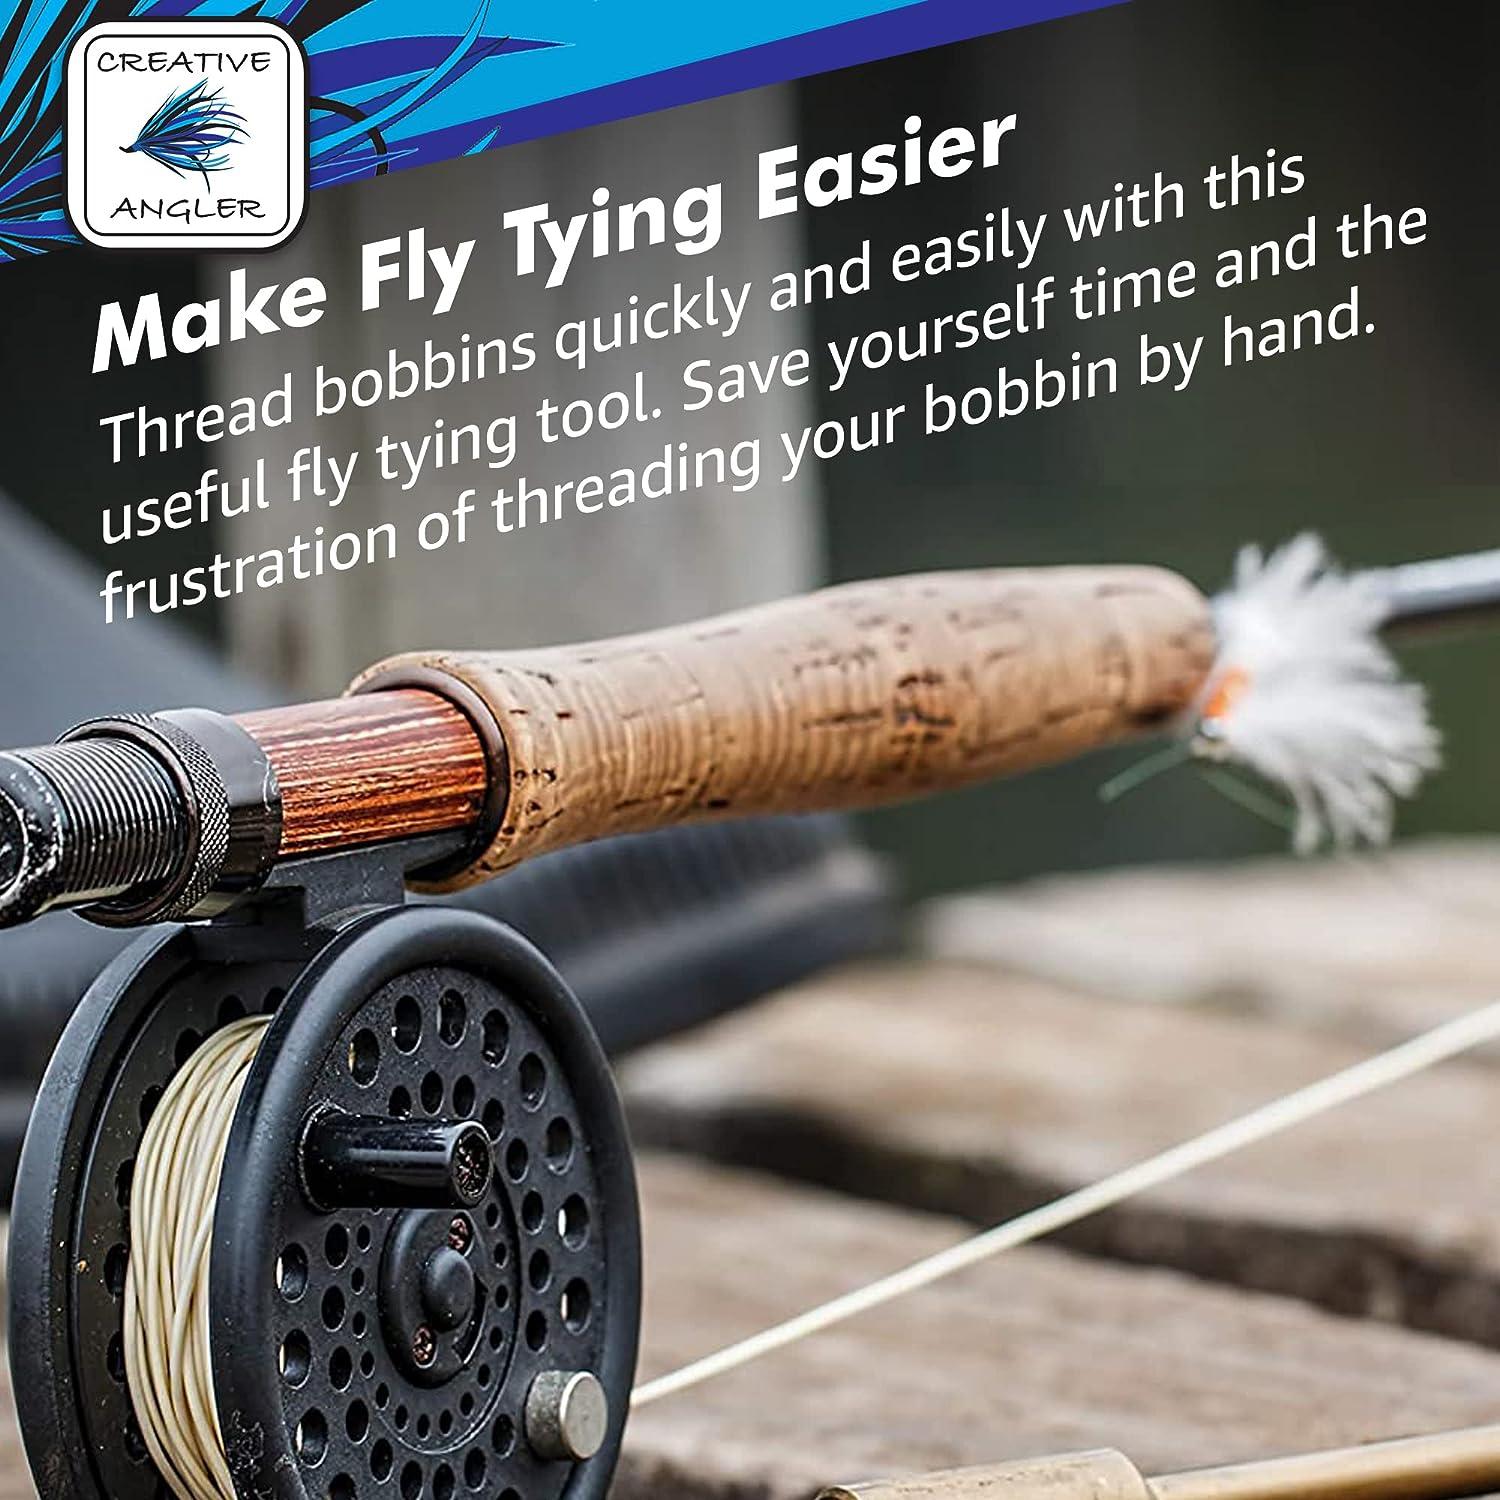 Creative Angler Fly Fishing Tying Bobbin and Wire Threader, Thread